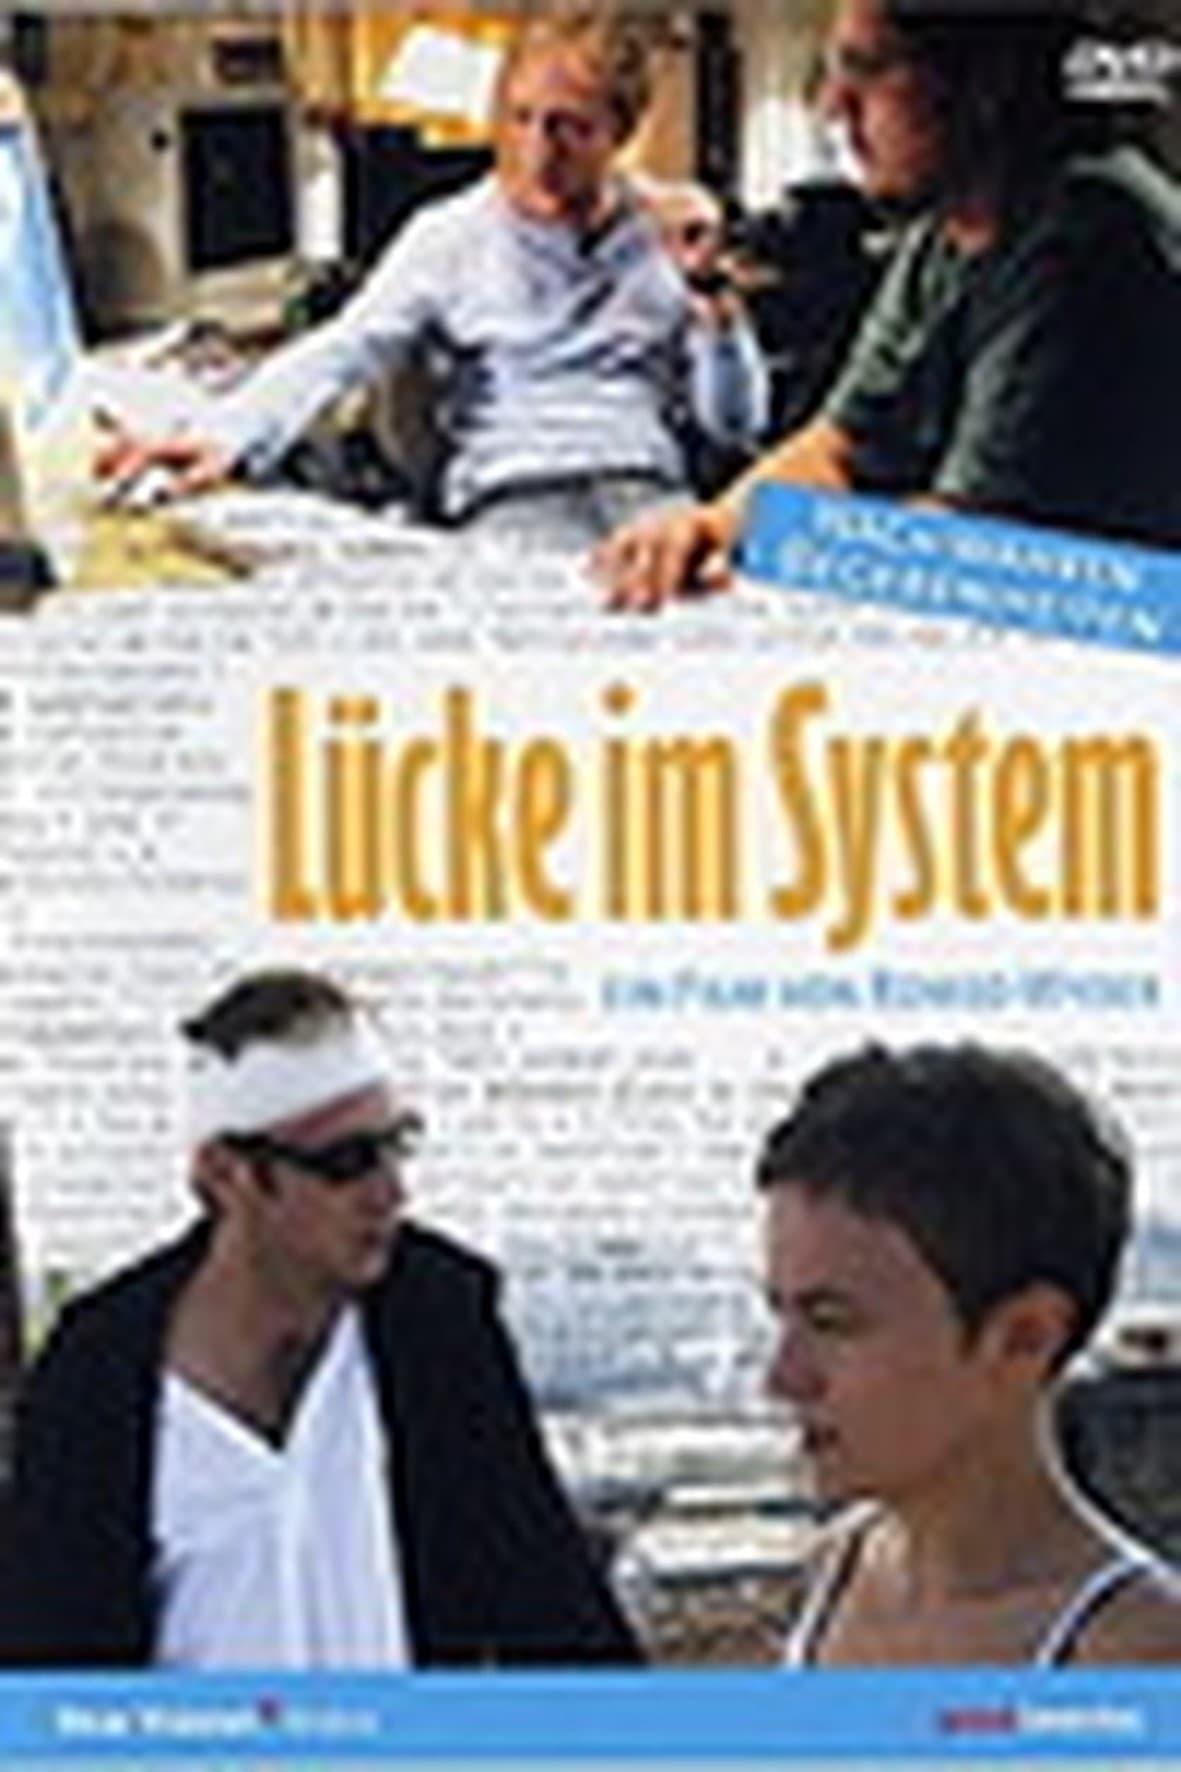 Lücke im System poster